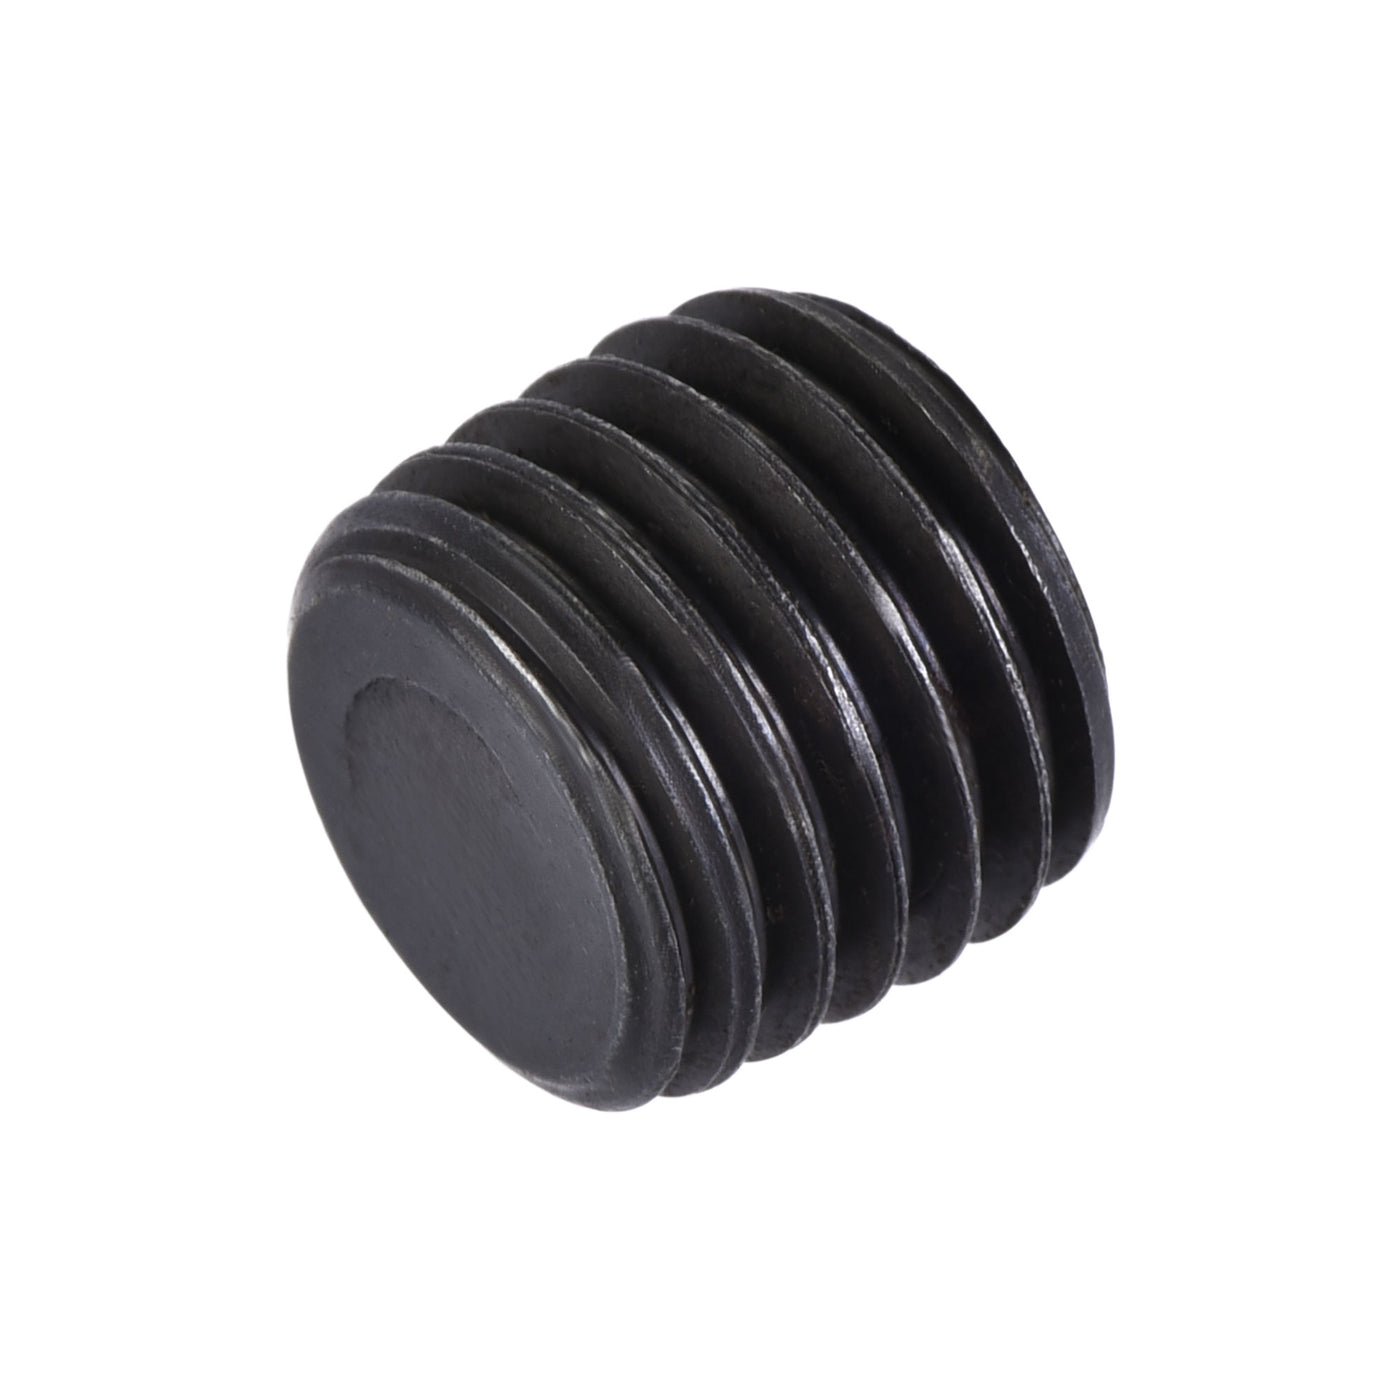 Uxcell Uxcell Carbon Steel Internal Hex Thread Socket Pipe Plug M22x1.5 Male Thread Black 5Pcs